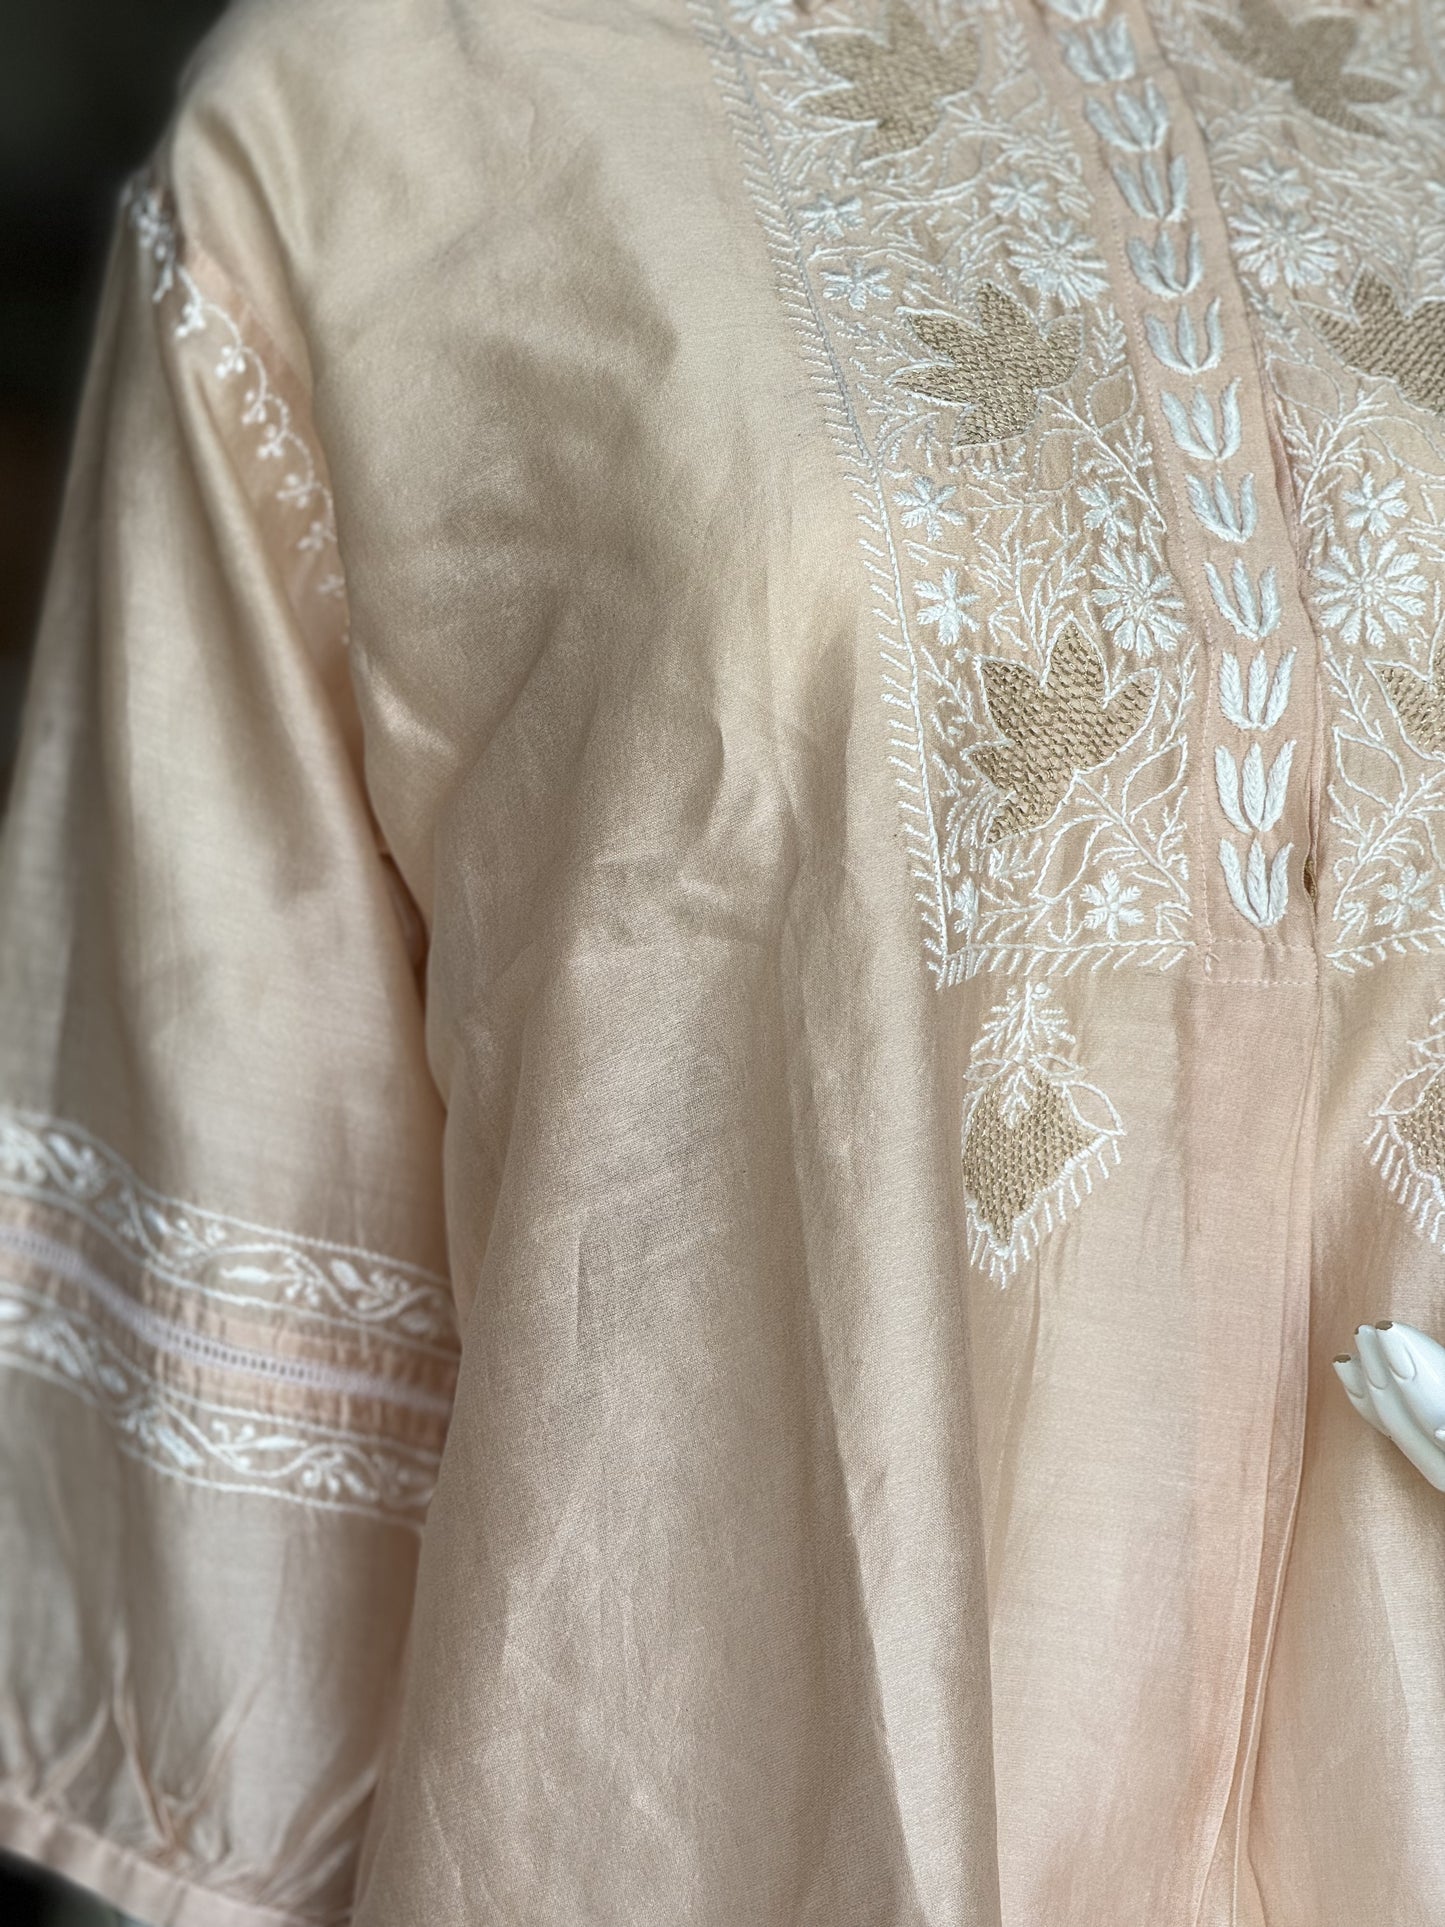 Chikankari hand embroidery anti-fit tunic on Silk chanderi in class pastel shades